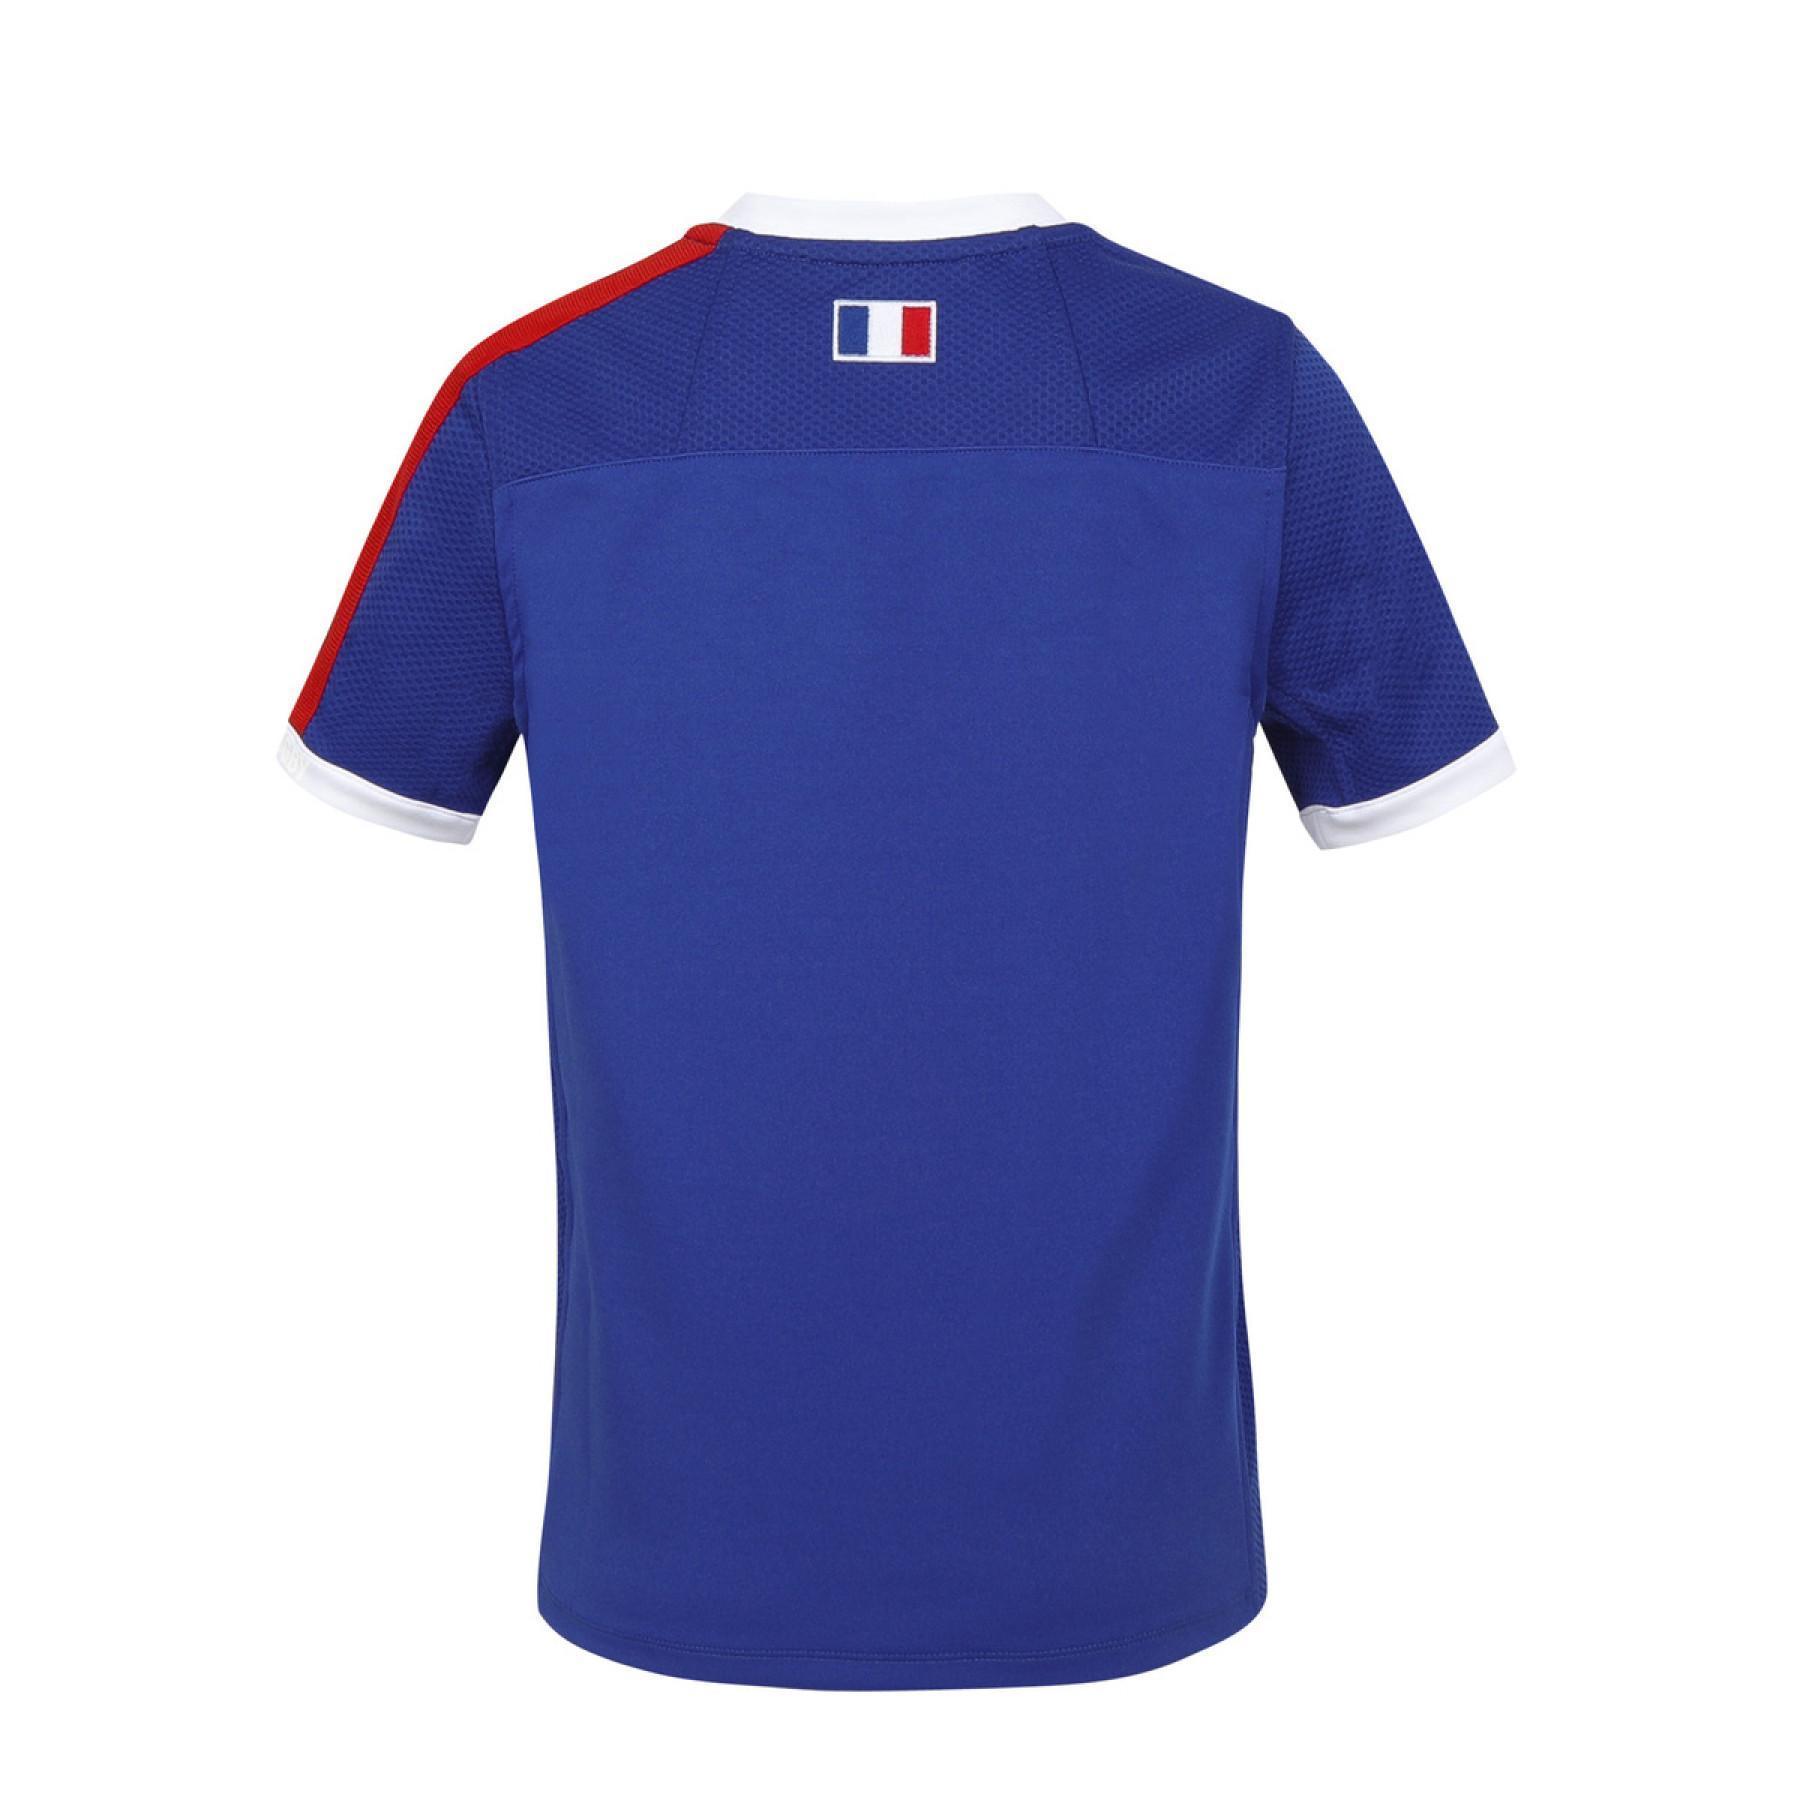 Children's jersey replica xv de France